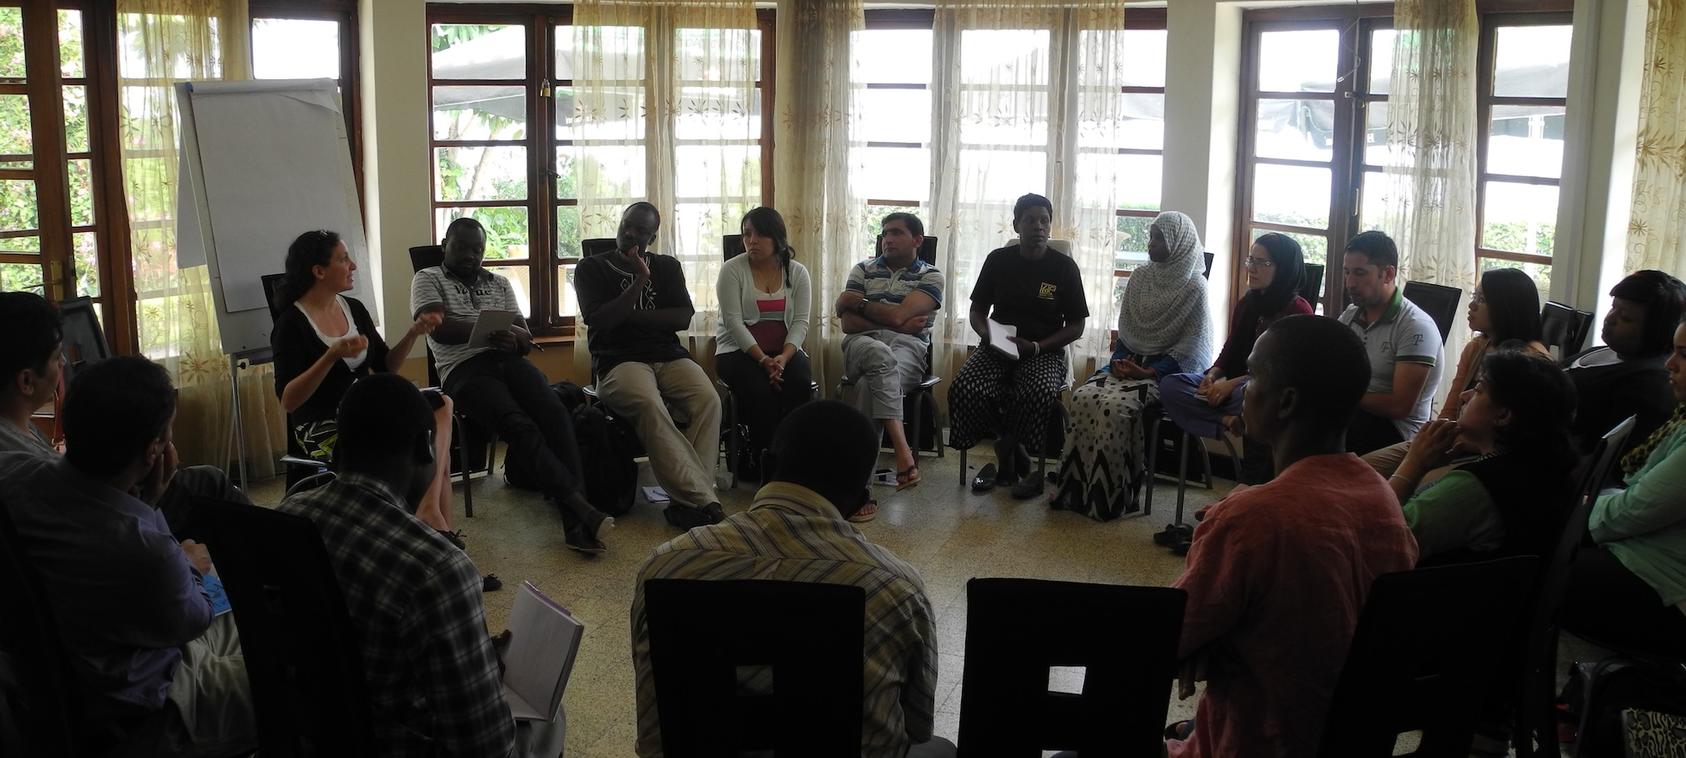 Participants in a dialogue.